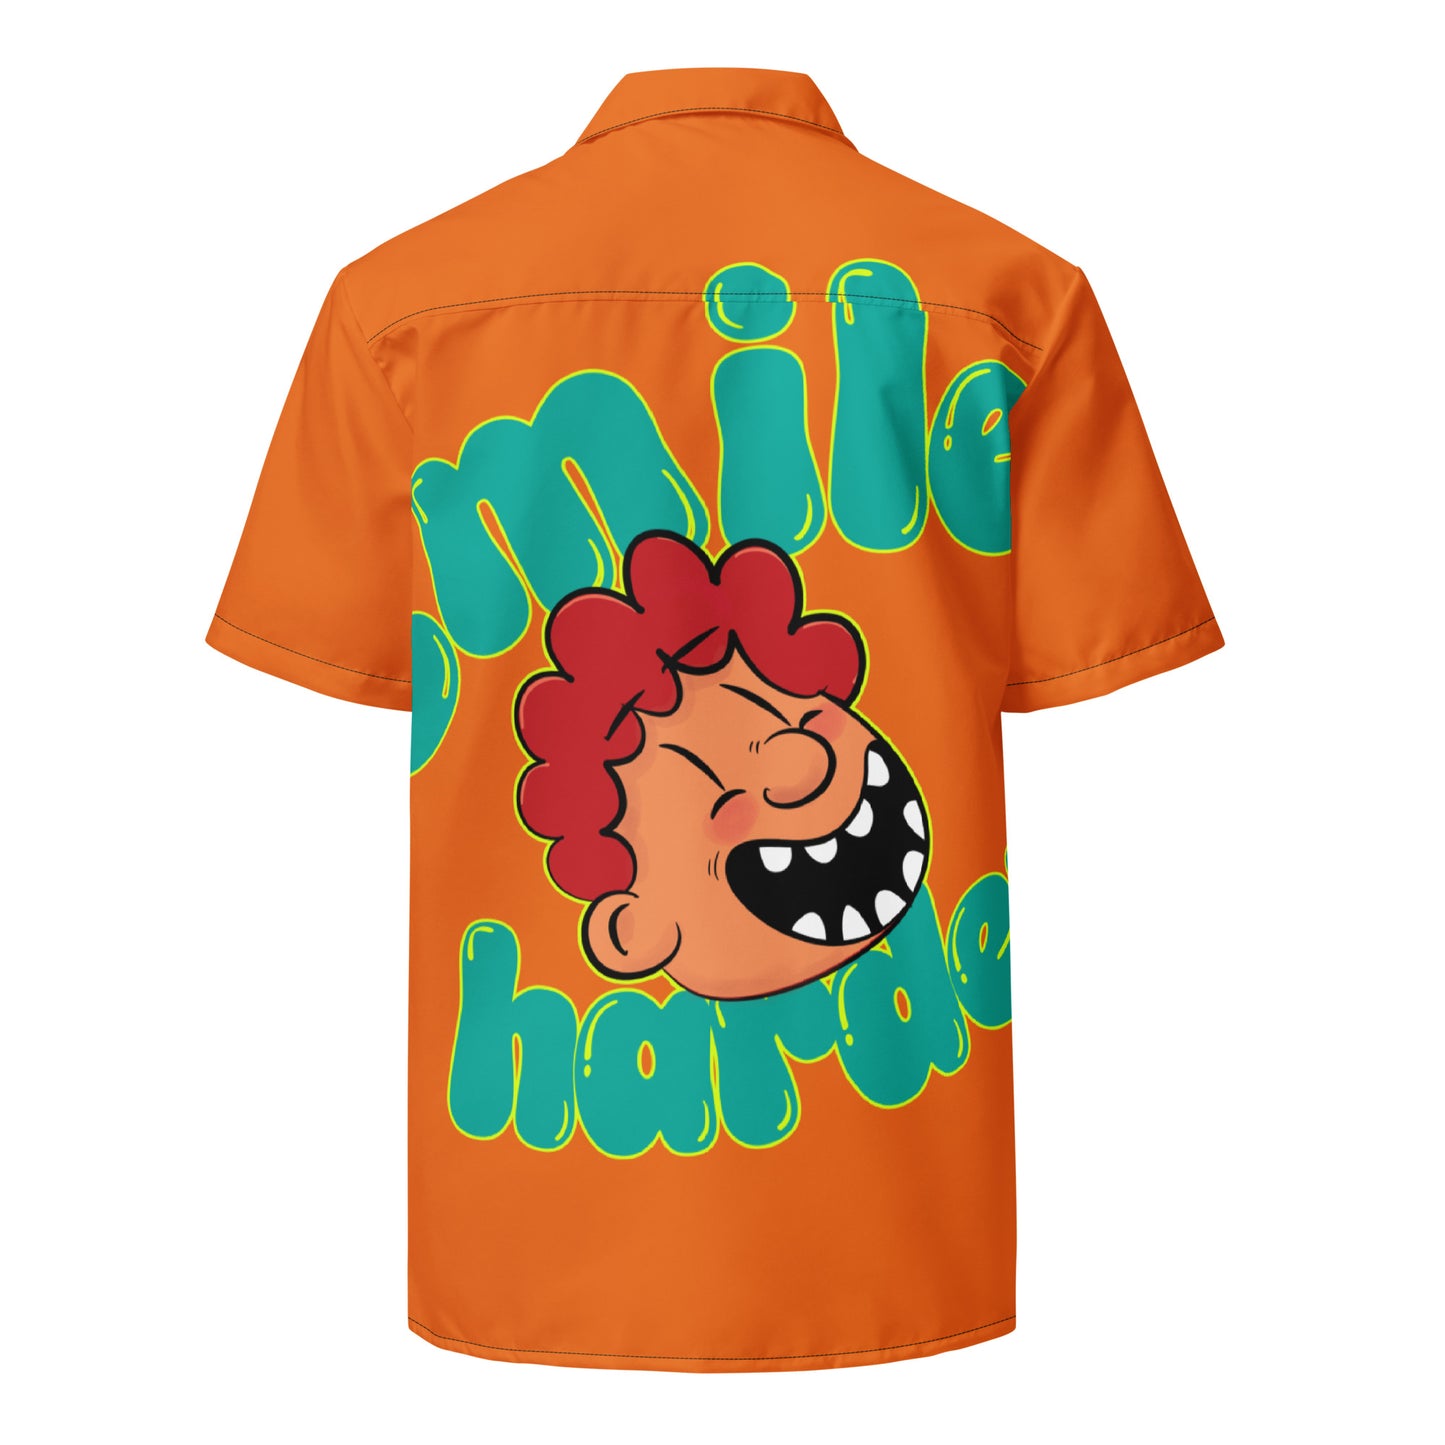 Smile Harder Unisex button shirt